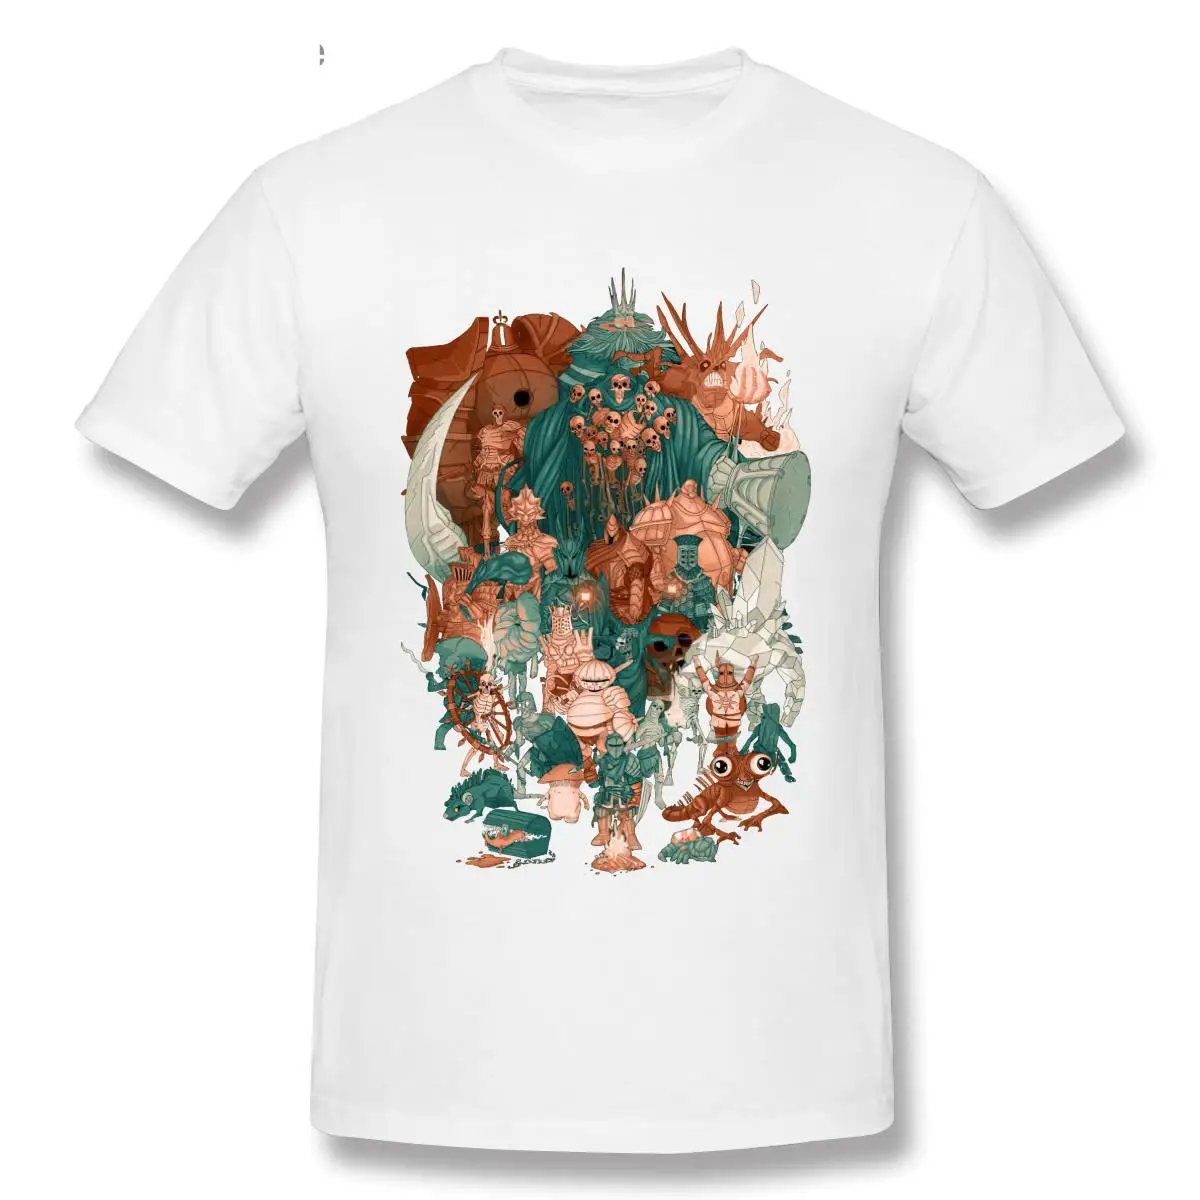 

Dark Souls Prepare To Die Funny Game T Shirt Arteries Praise The Sun Mens Tops T-Shirts Pure Cotton Autumn Clothes